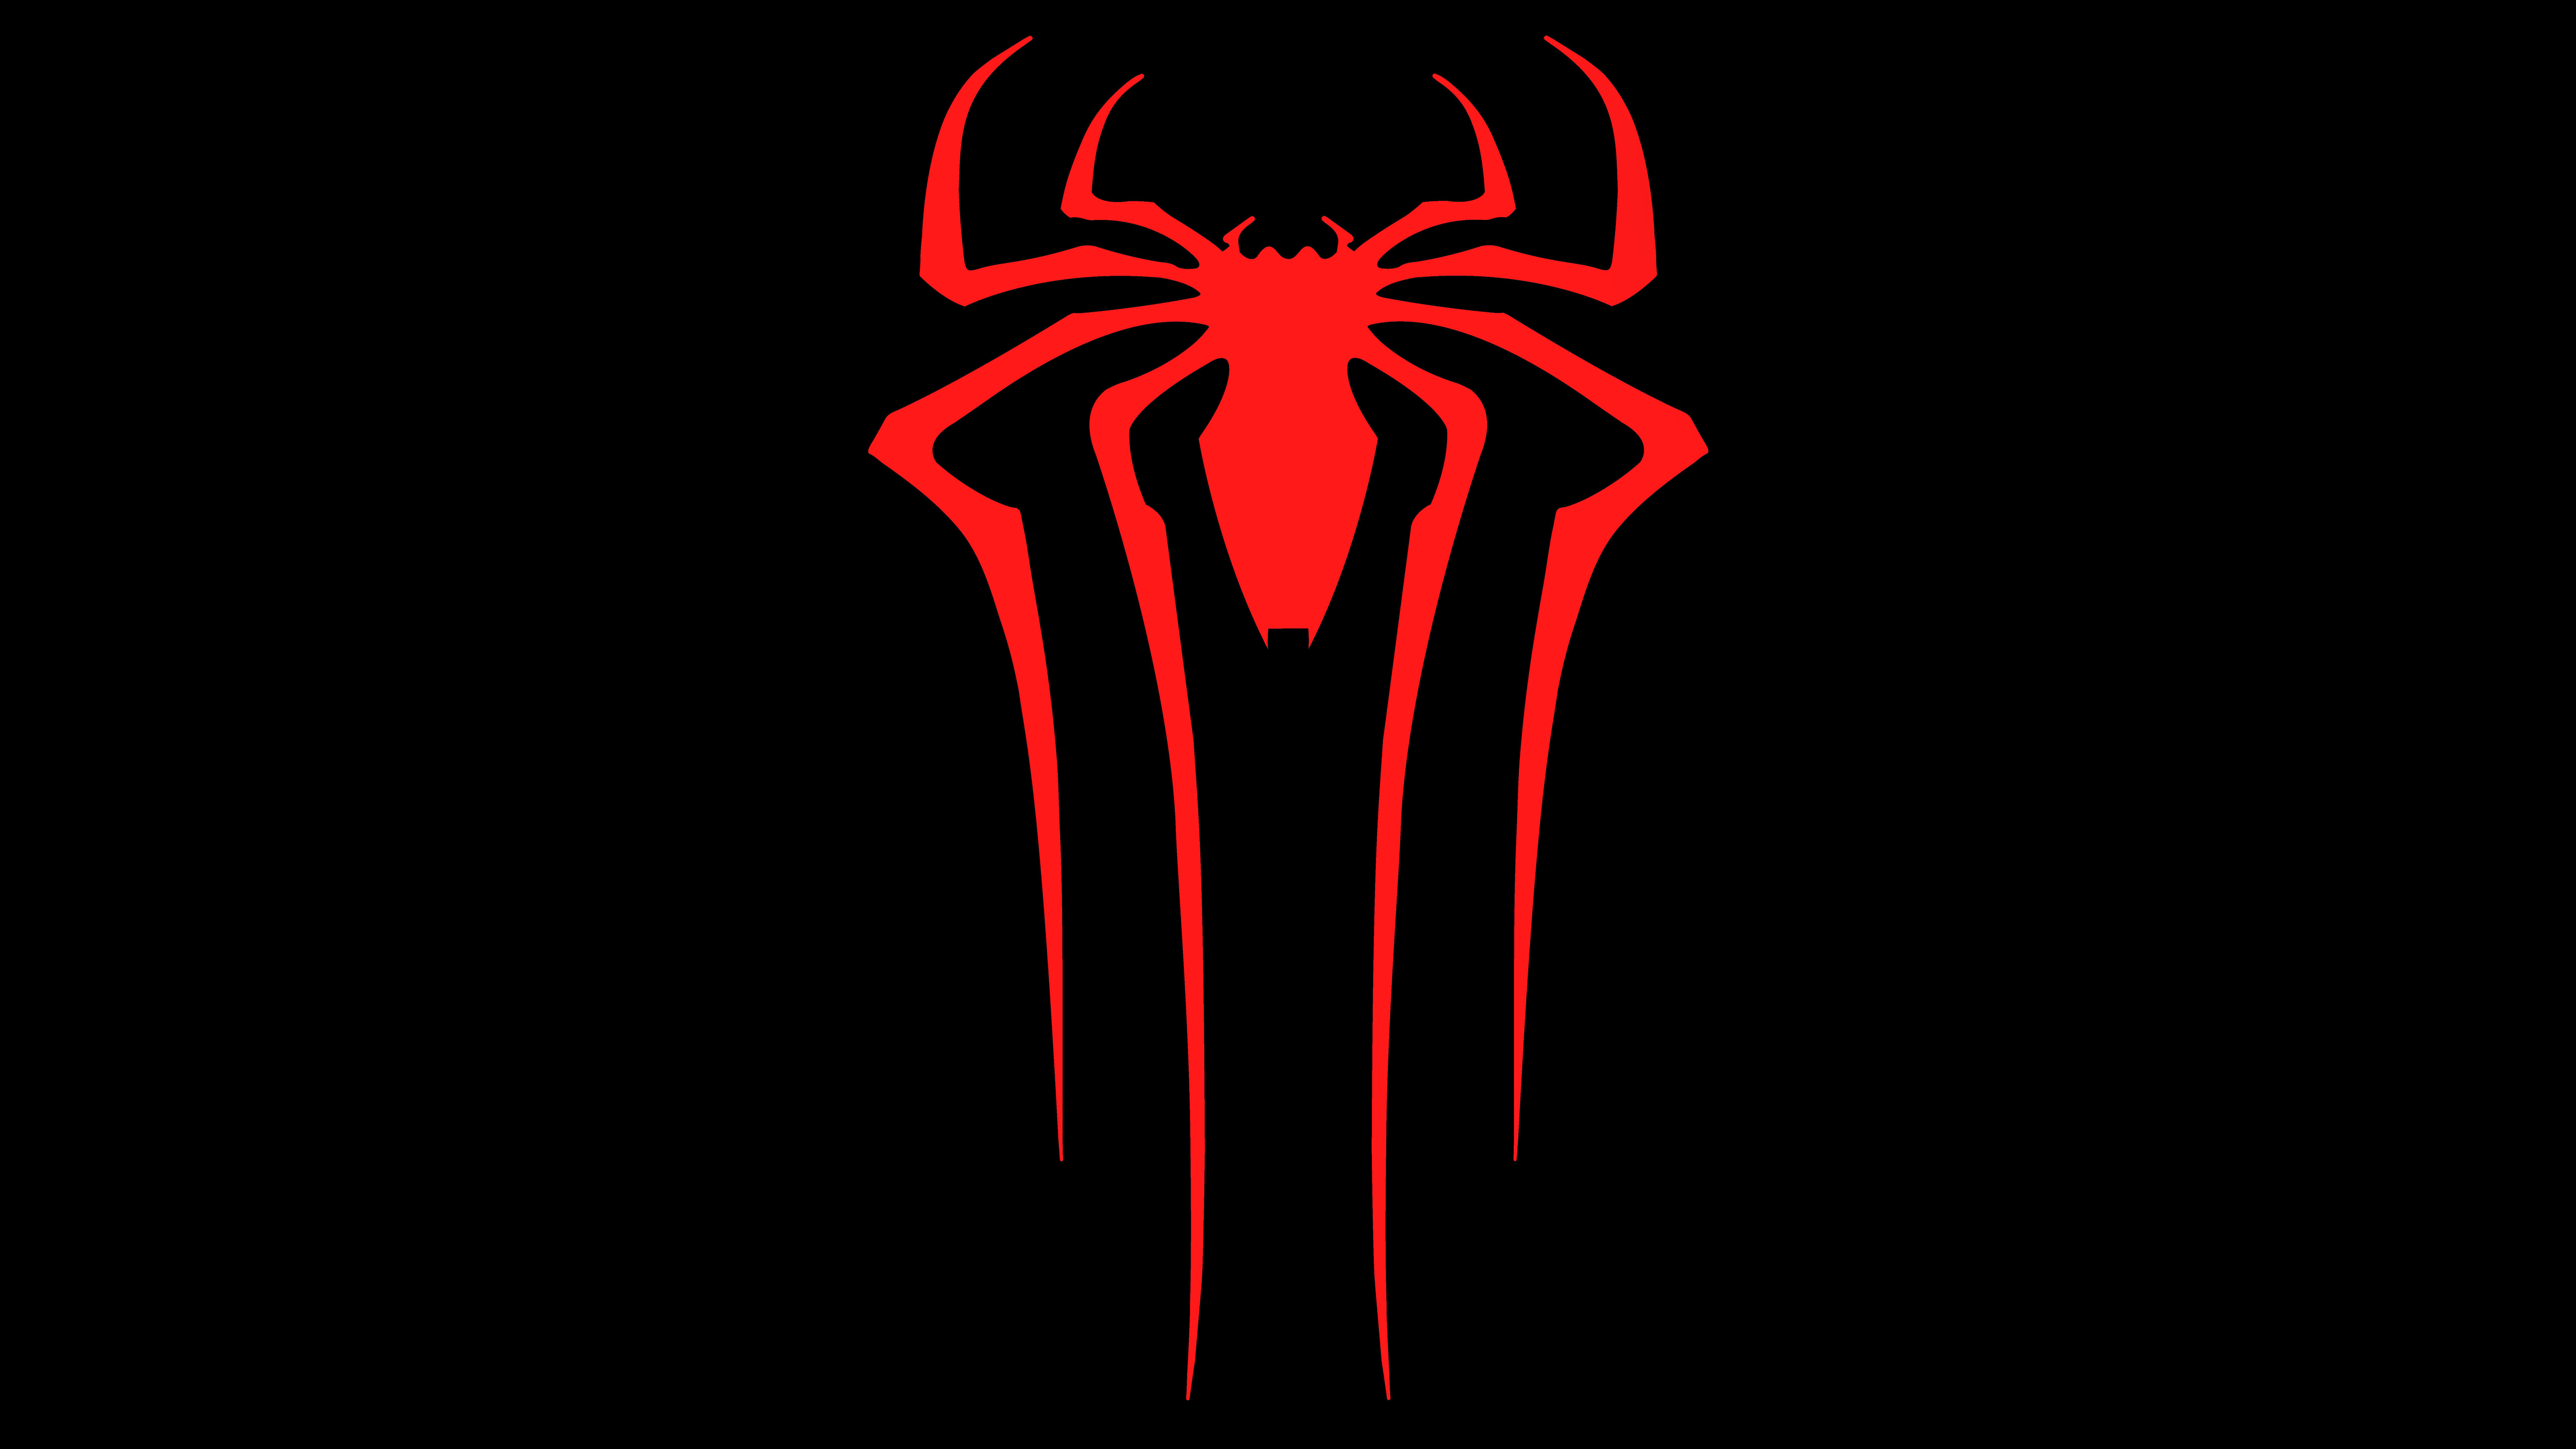 download wallpaper logo spiderman hd  download kumpulan